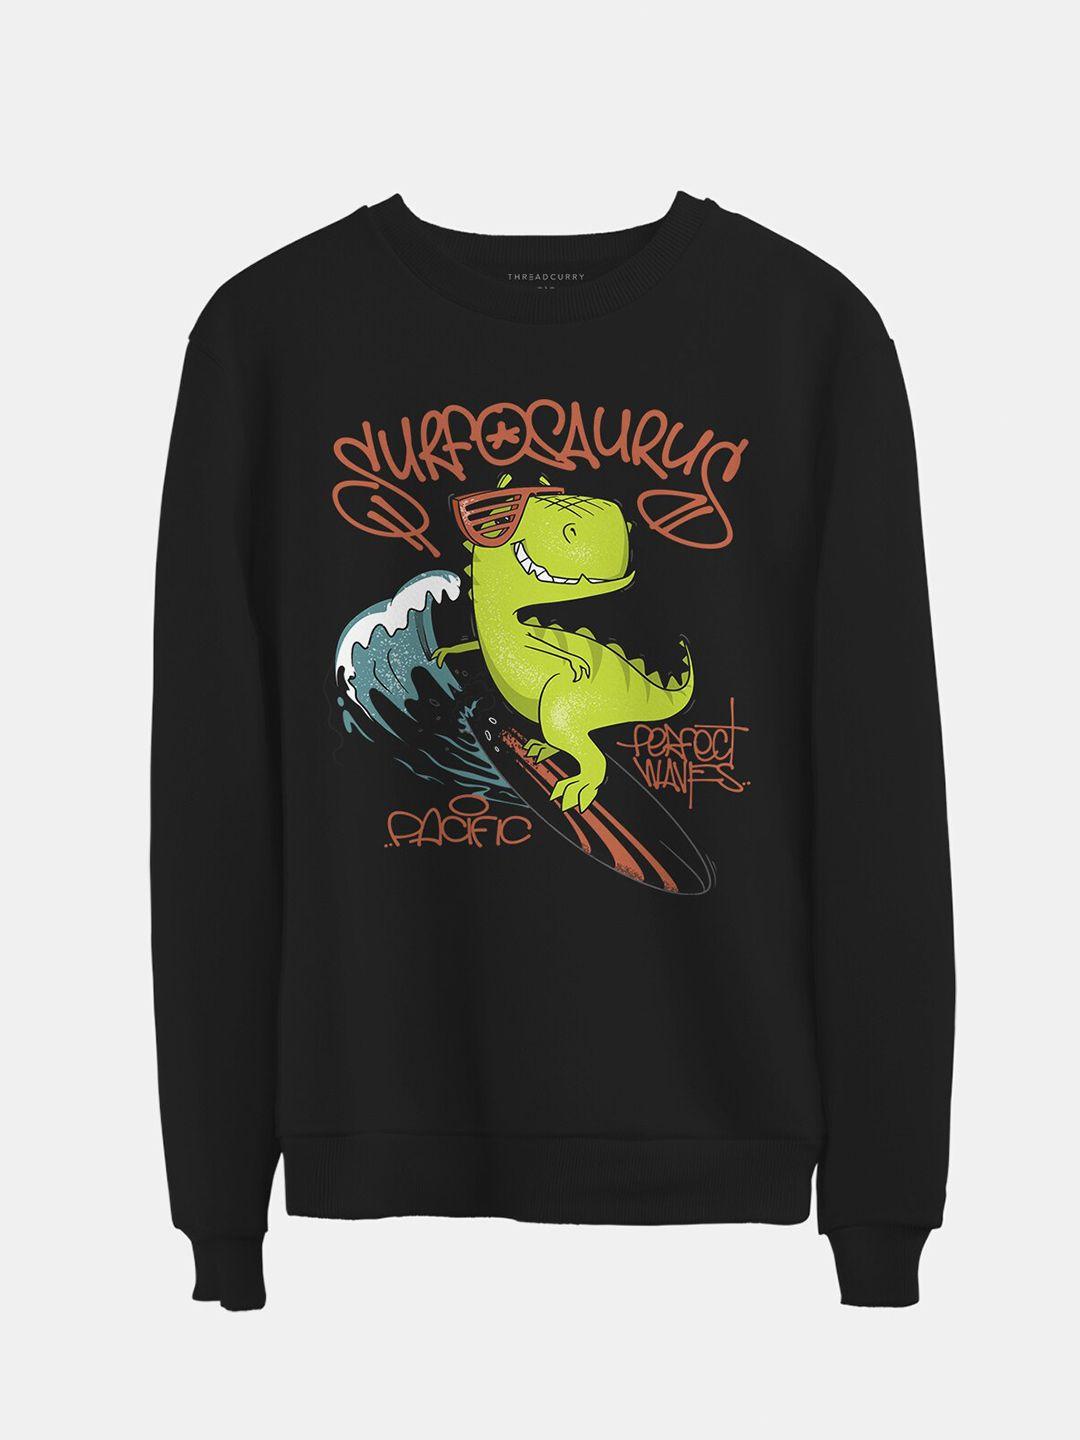 threadcurry unisex kids black printed sweatshirt